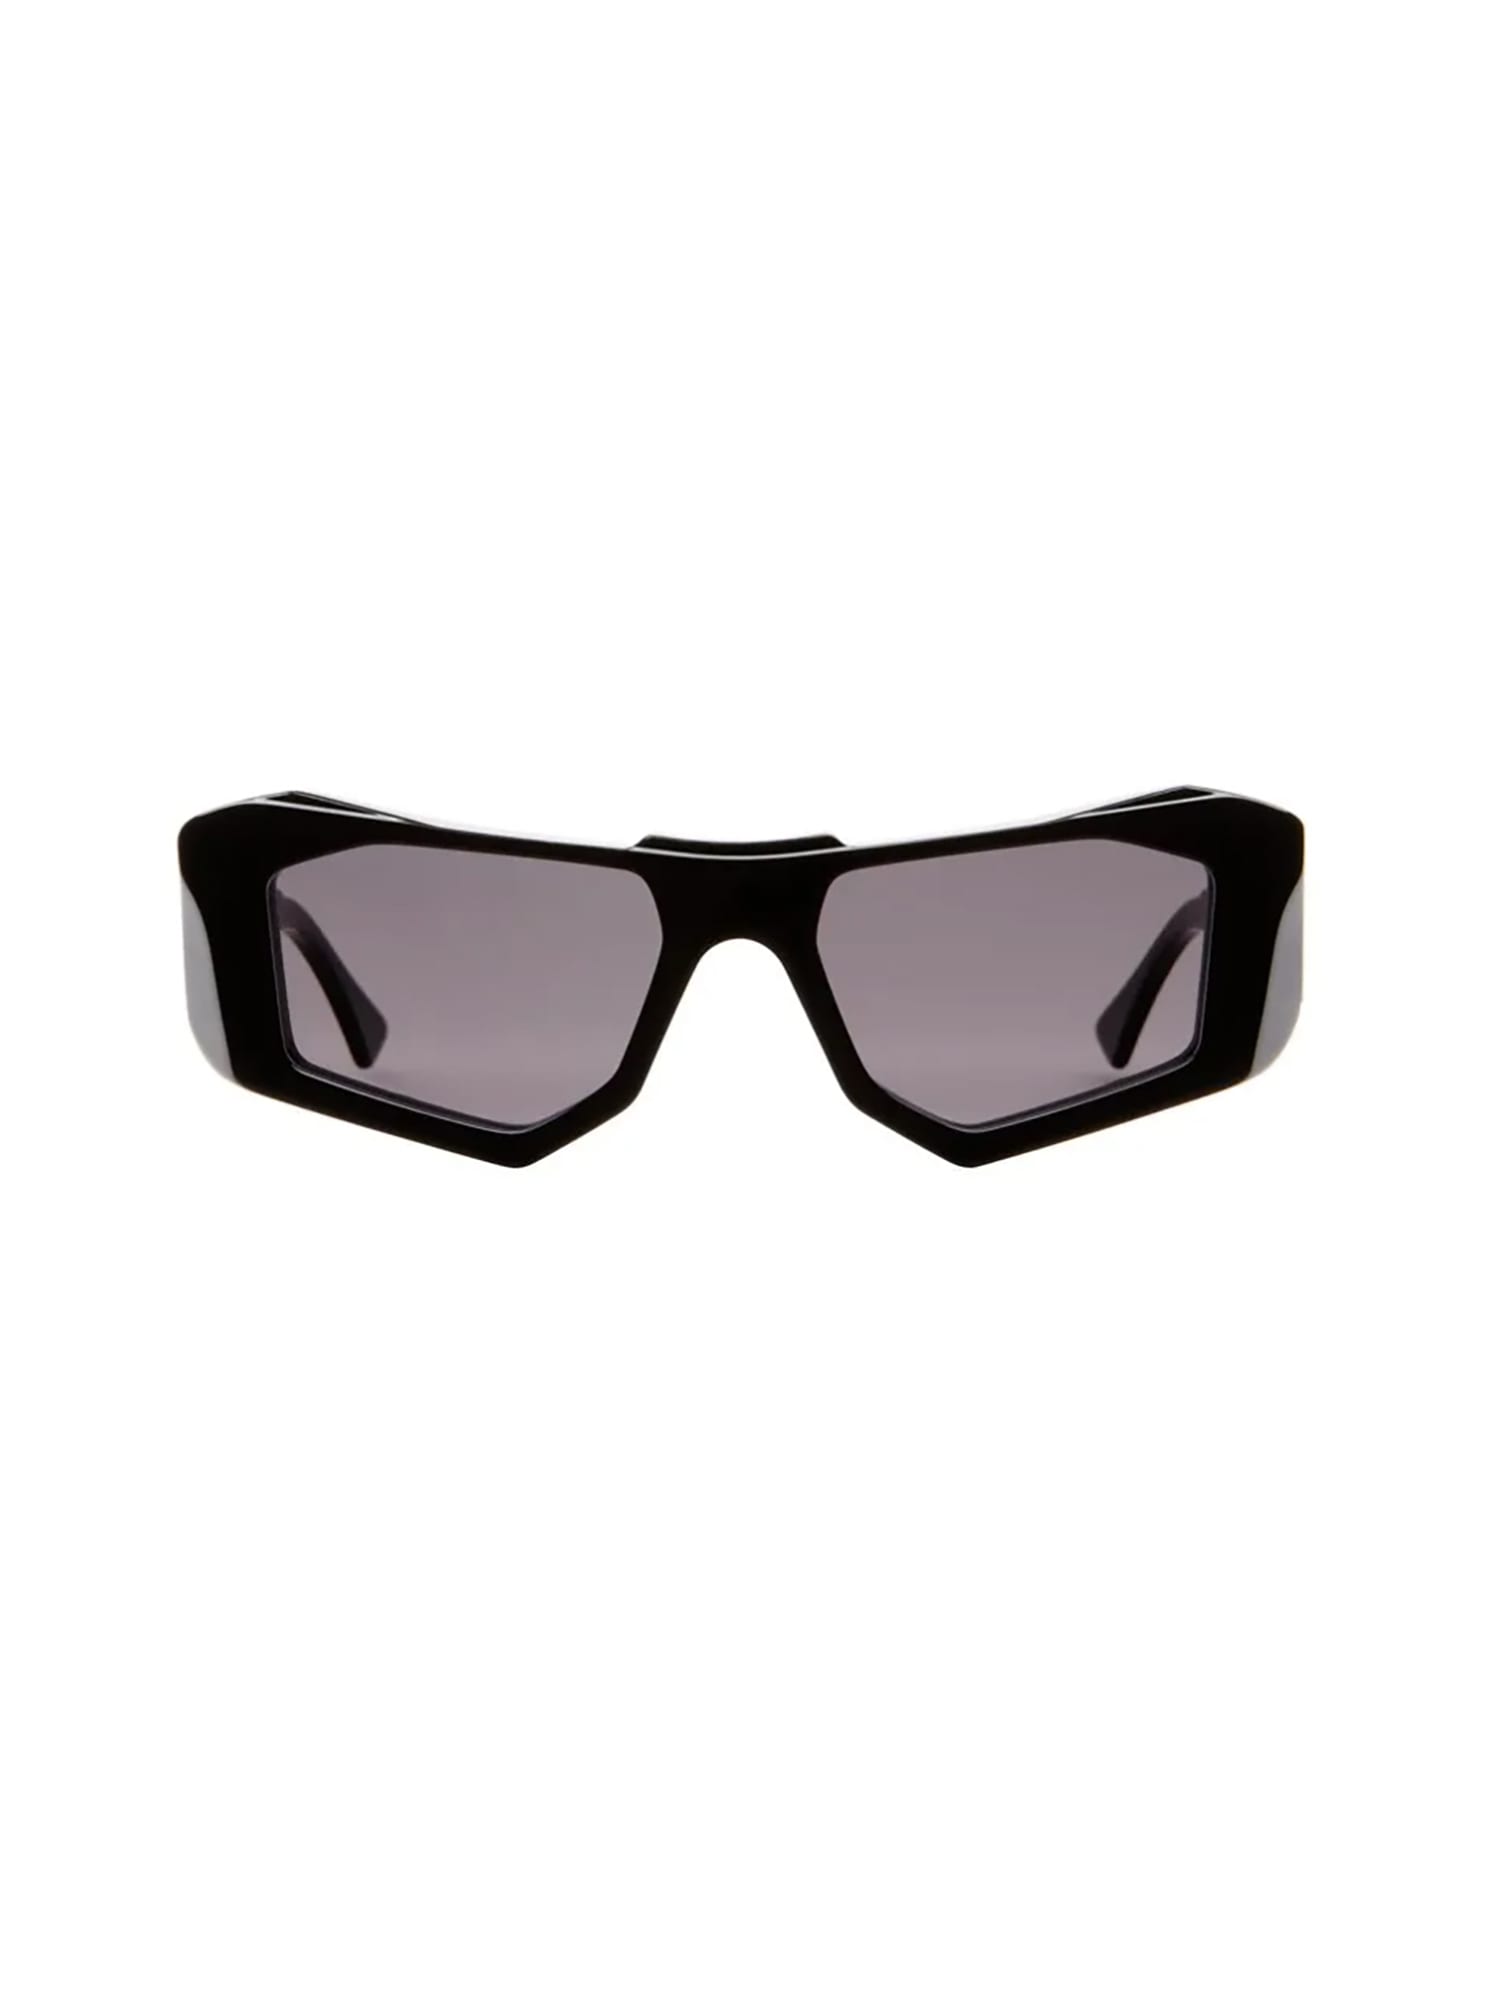 F6 Sunglasses